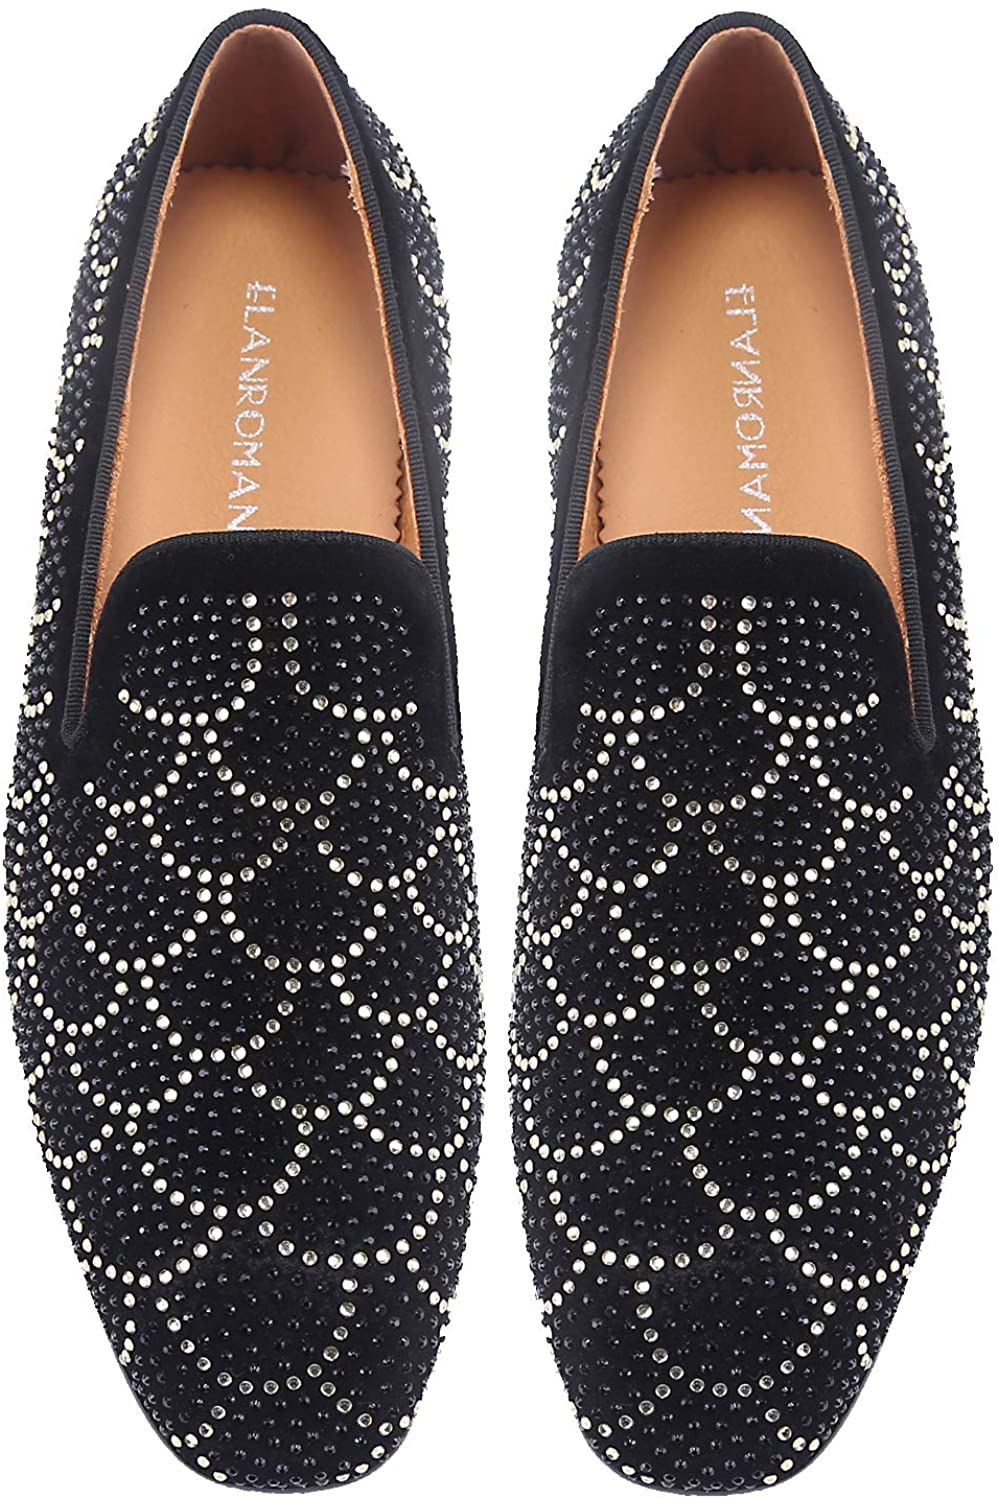  ELANROMAN Black Suede Loafers Men's Fashion Tuxedo Rhinestones  Slip-on Moccasins Wedding Shoes US 7